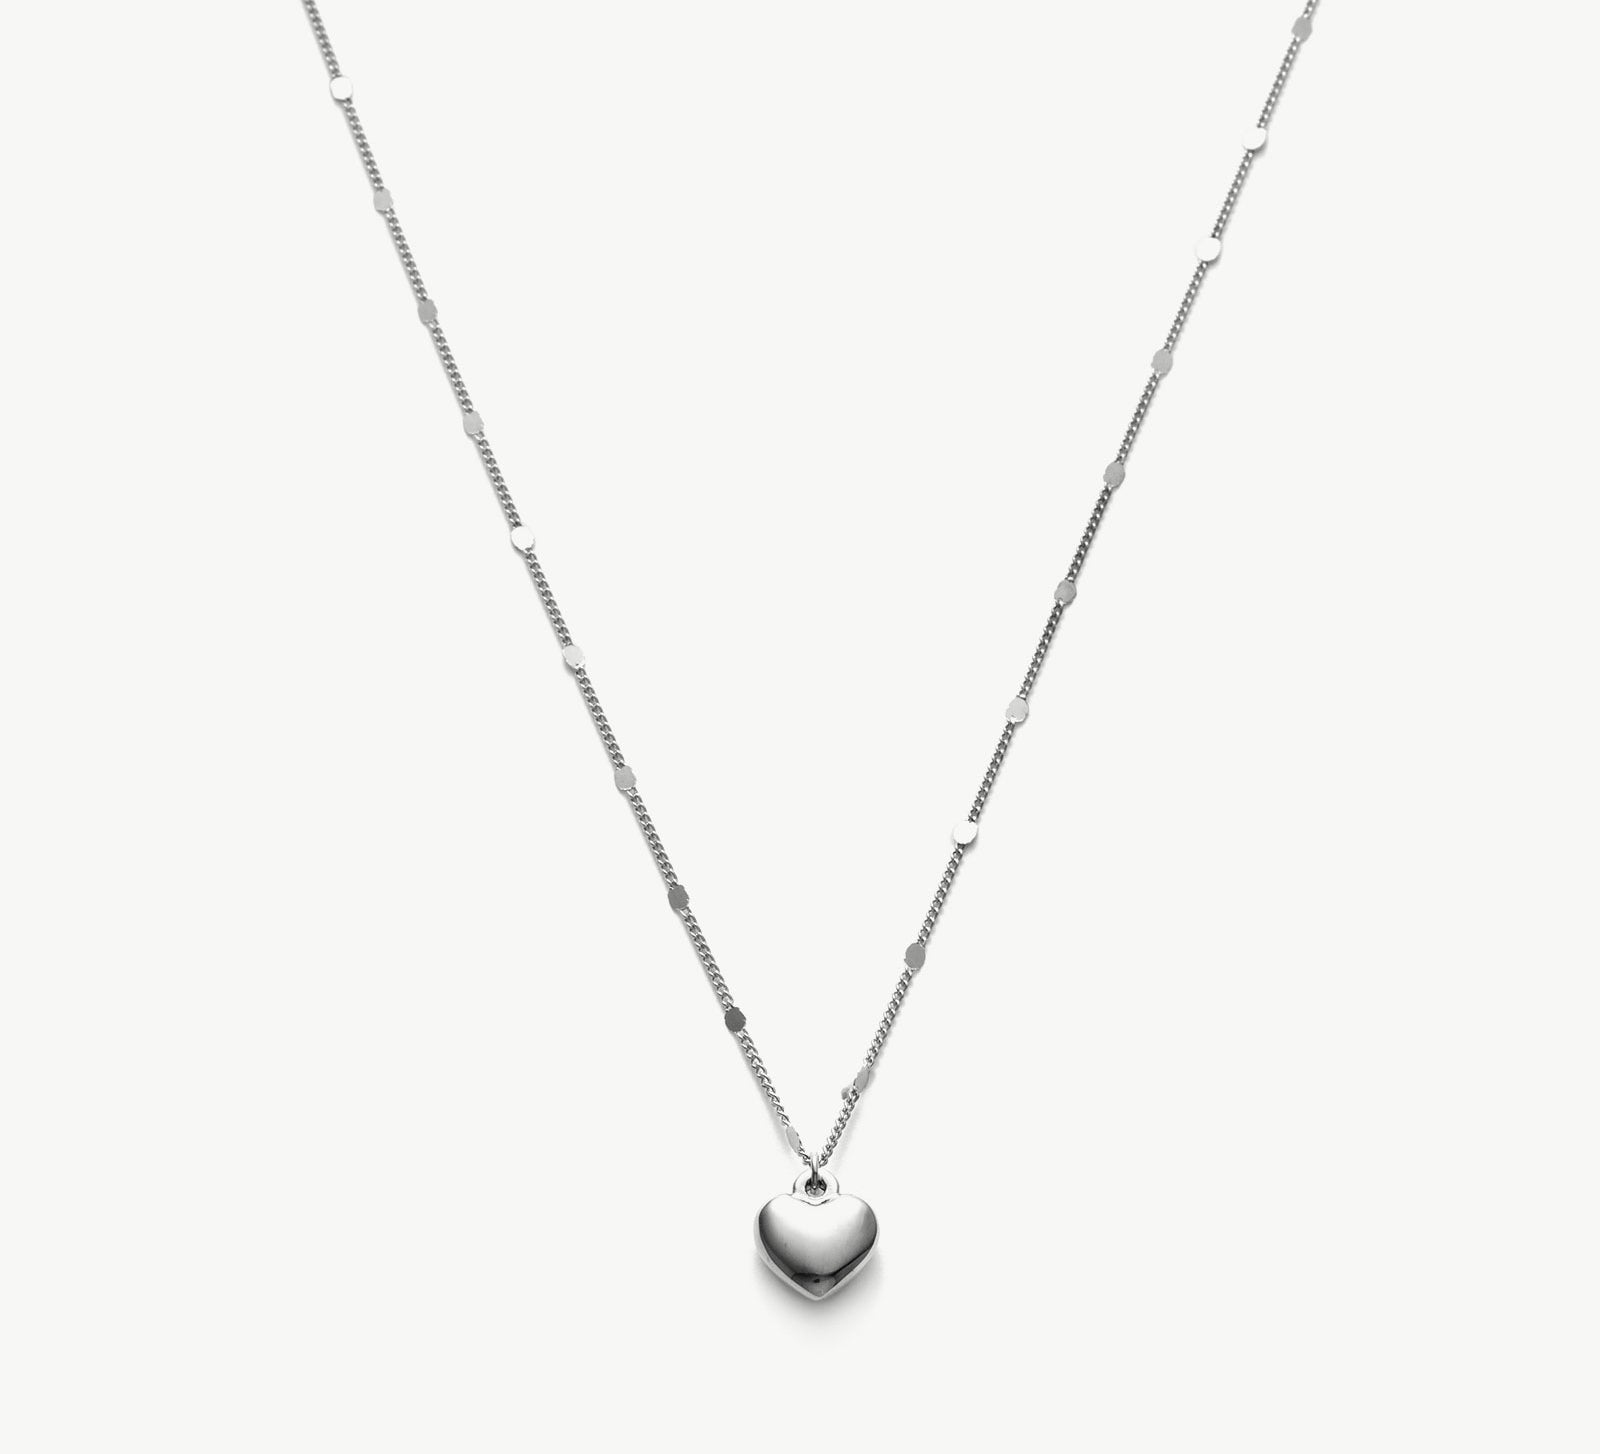 Platinum Heart Pendant Necklace, a chic platinum accent that enhances your style, featuring a stylish heart-shaped pendant in a lustrous platinum hue